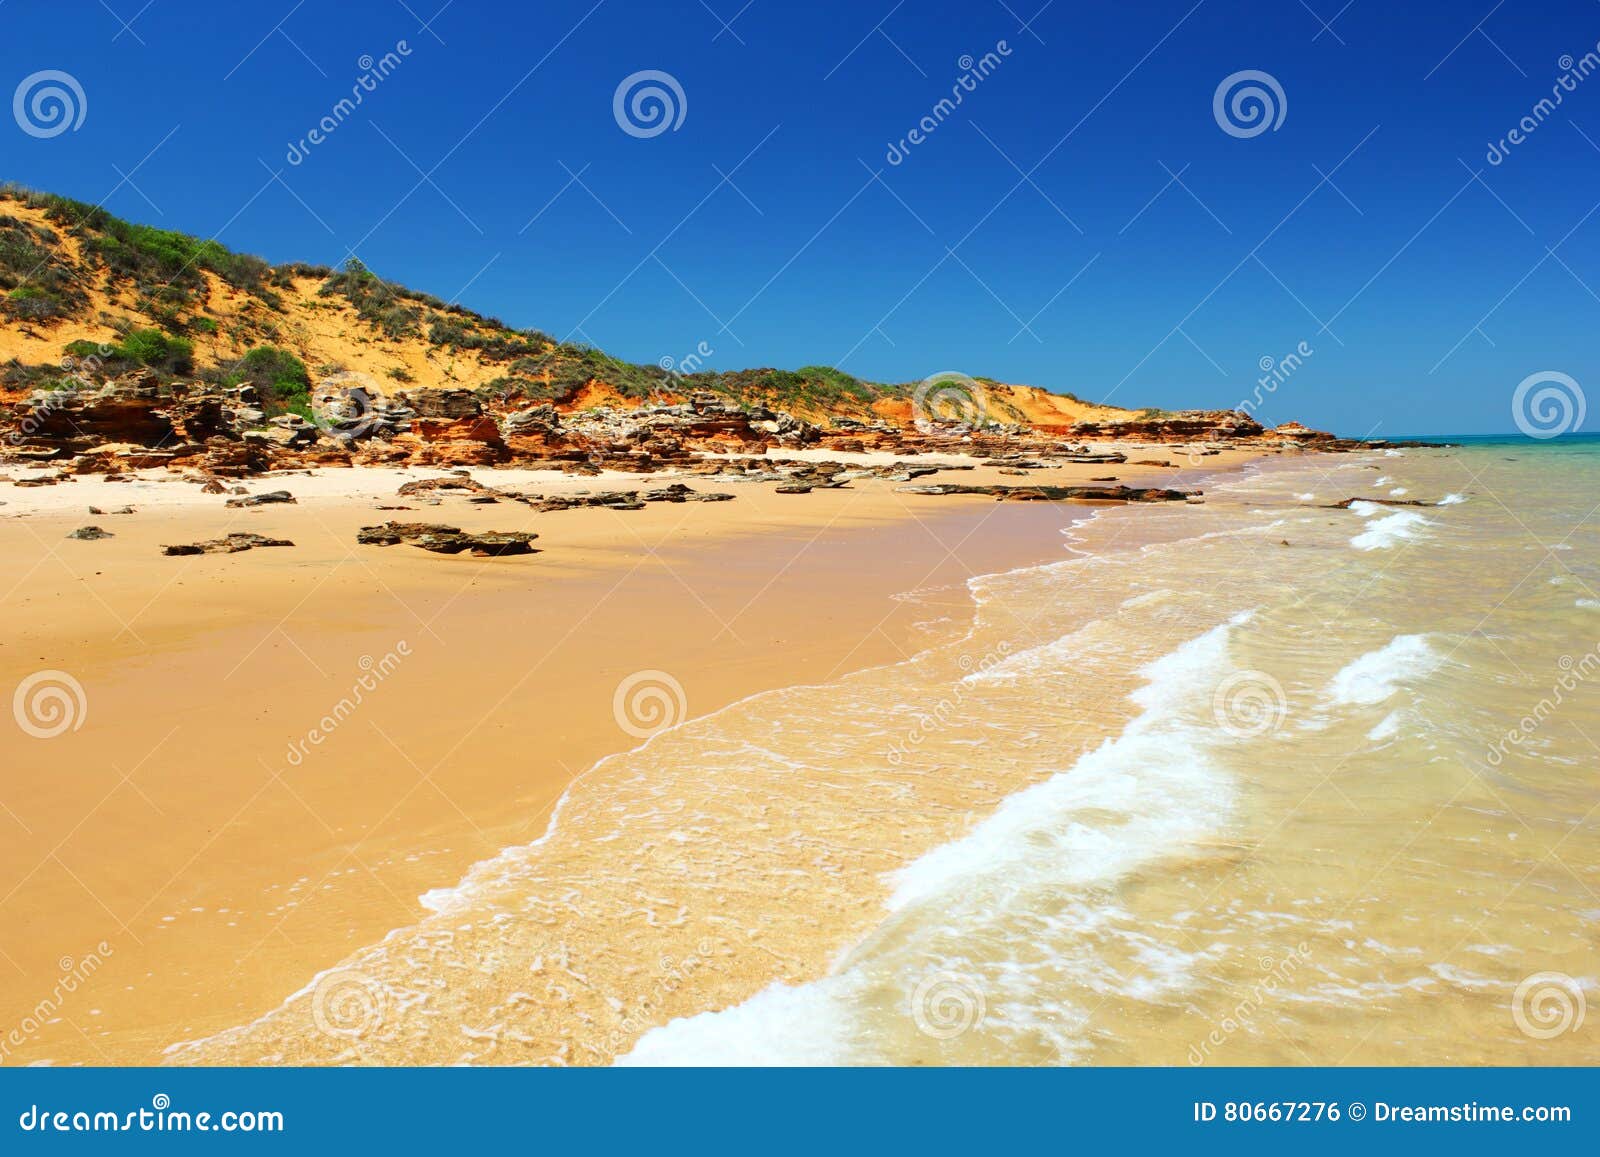 unspoiled beach, western australia